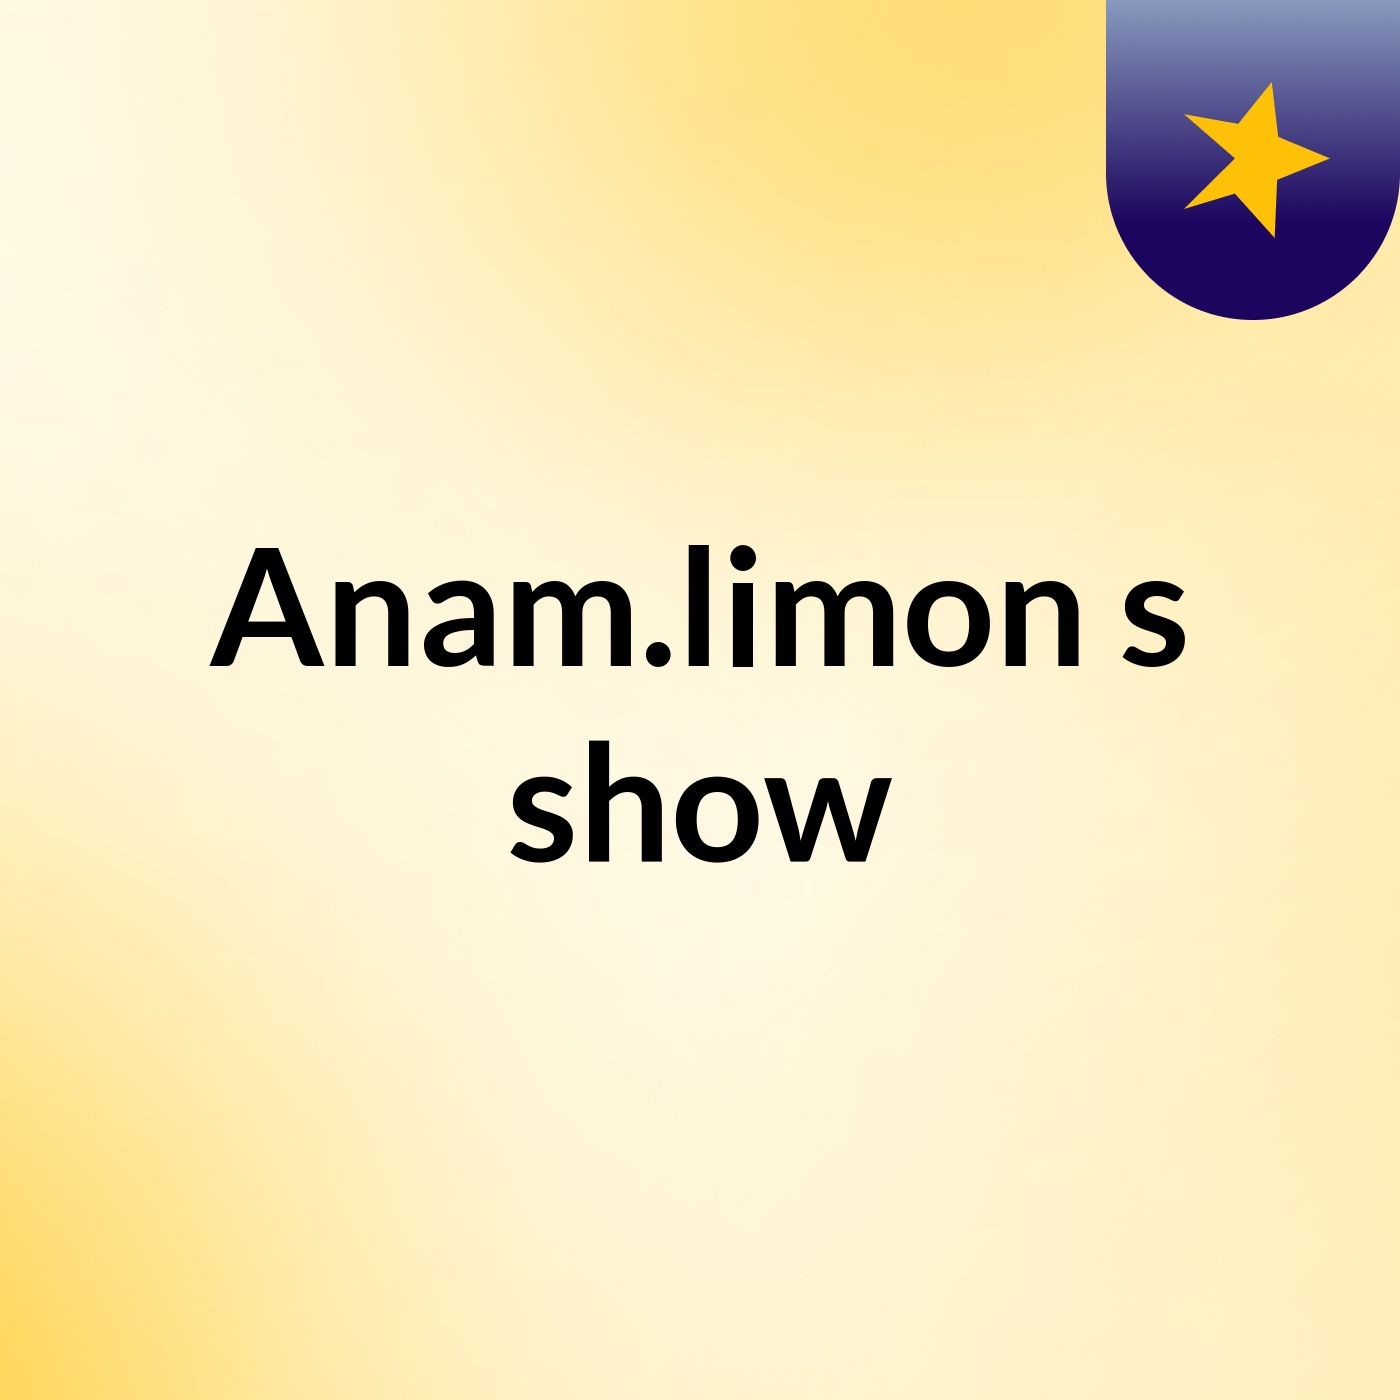 Anam.limon's show